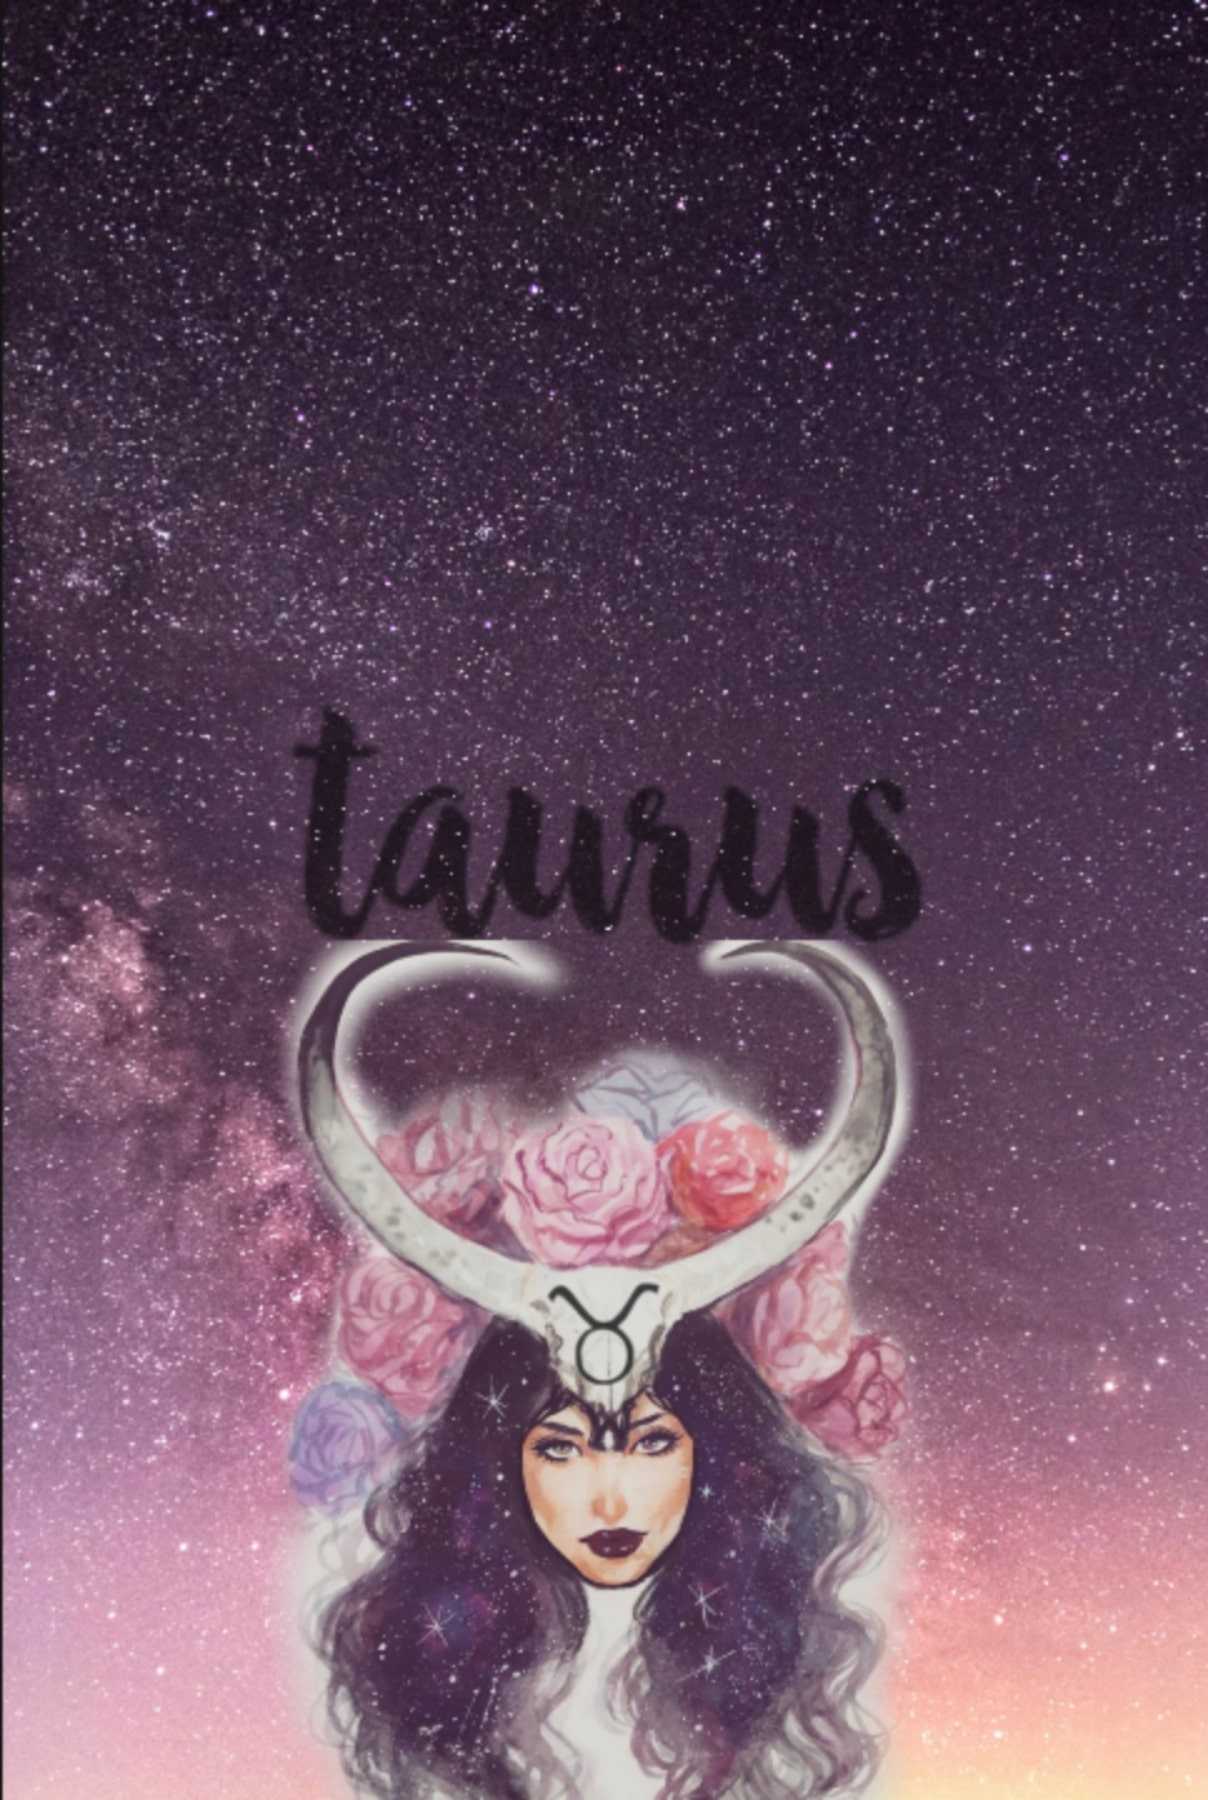 Taurus Zodiac Sign Wallpaper 52 images